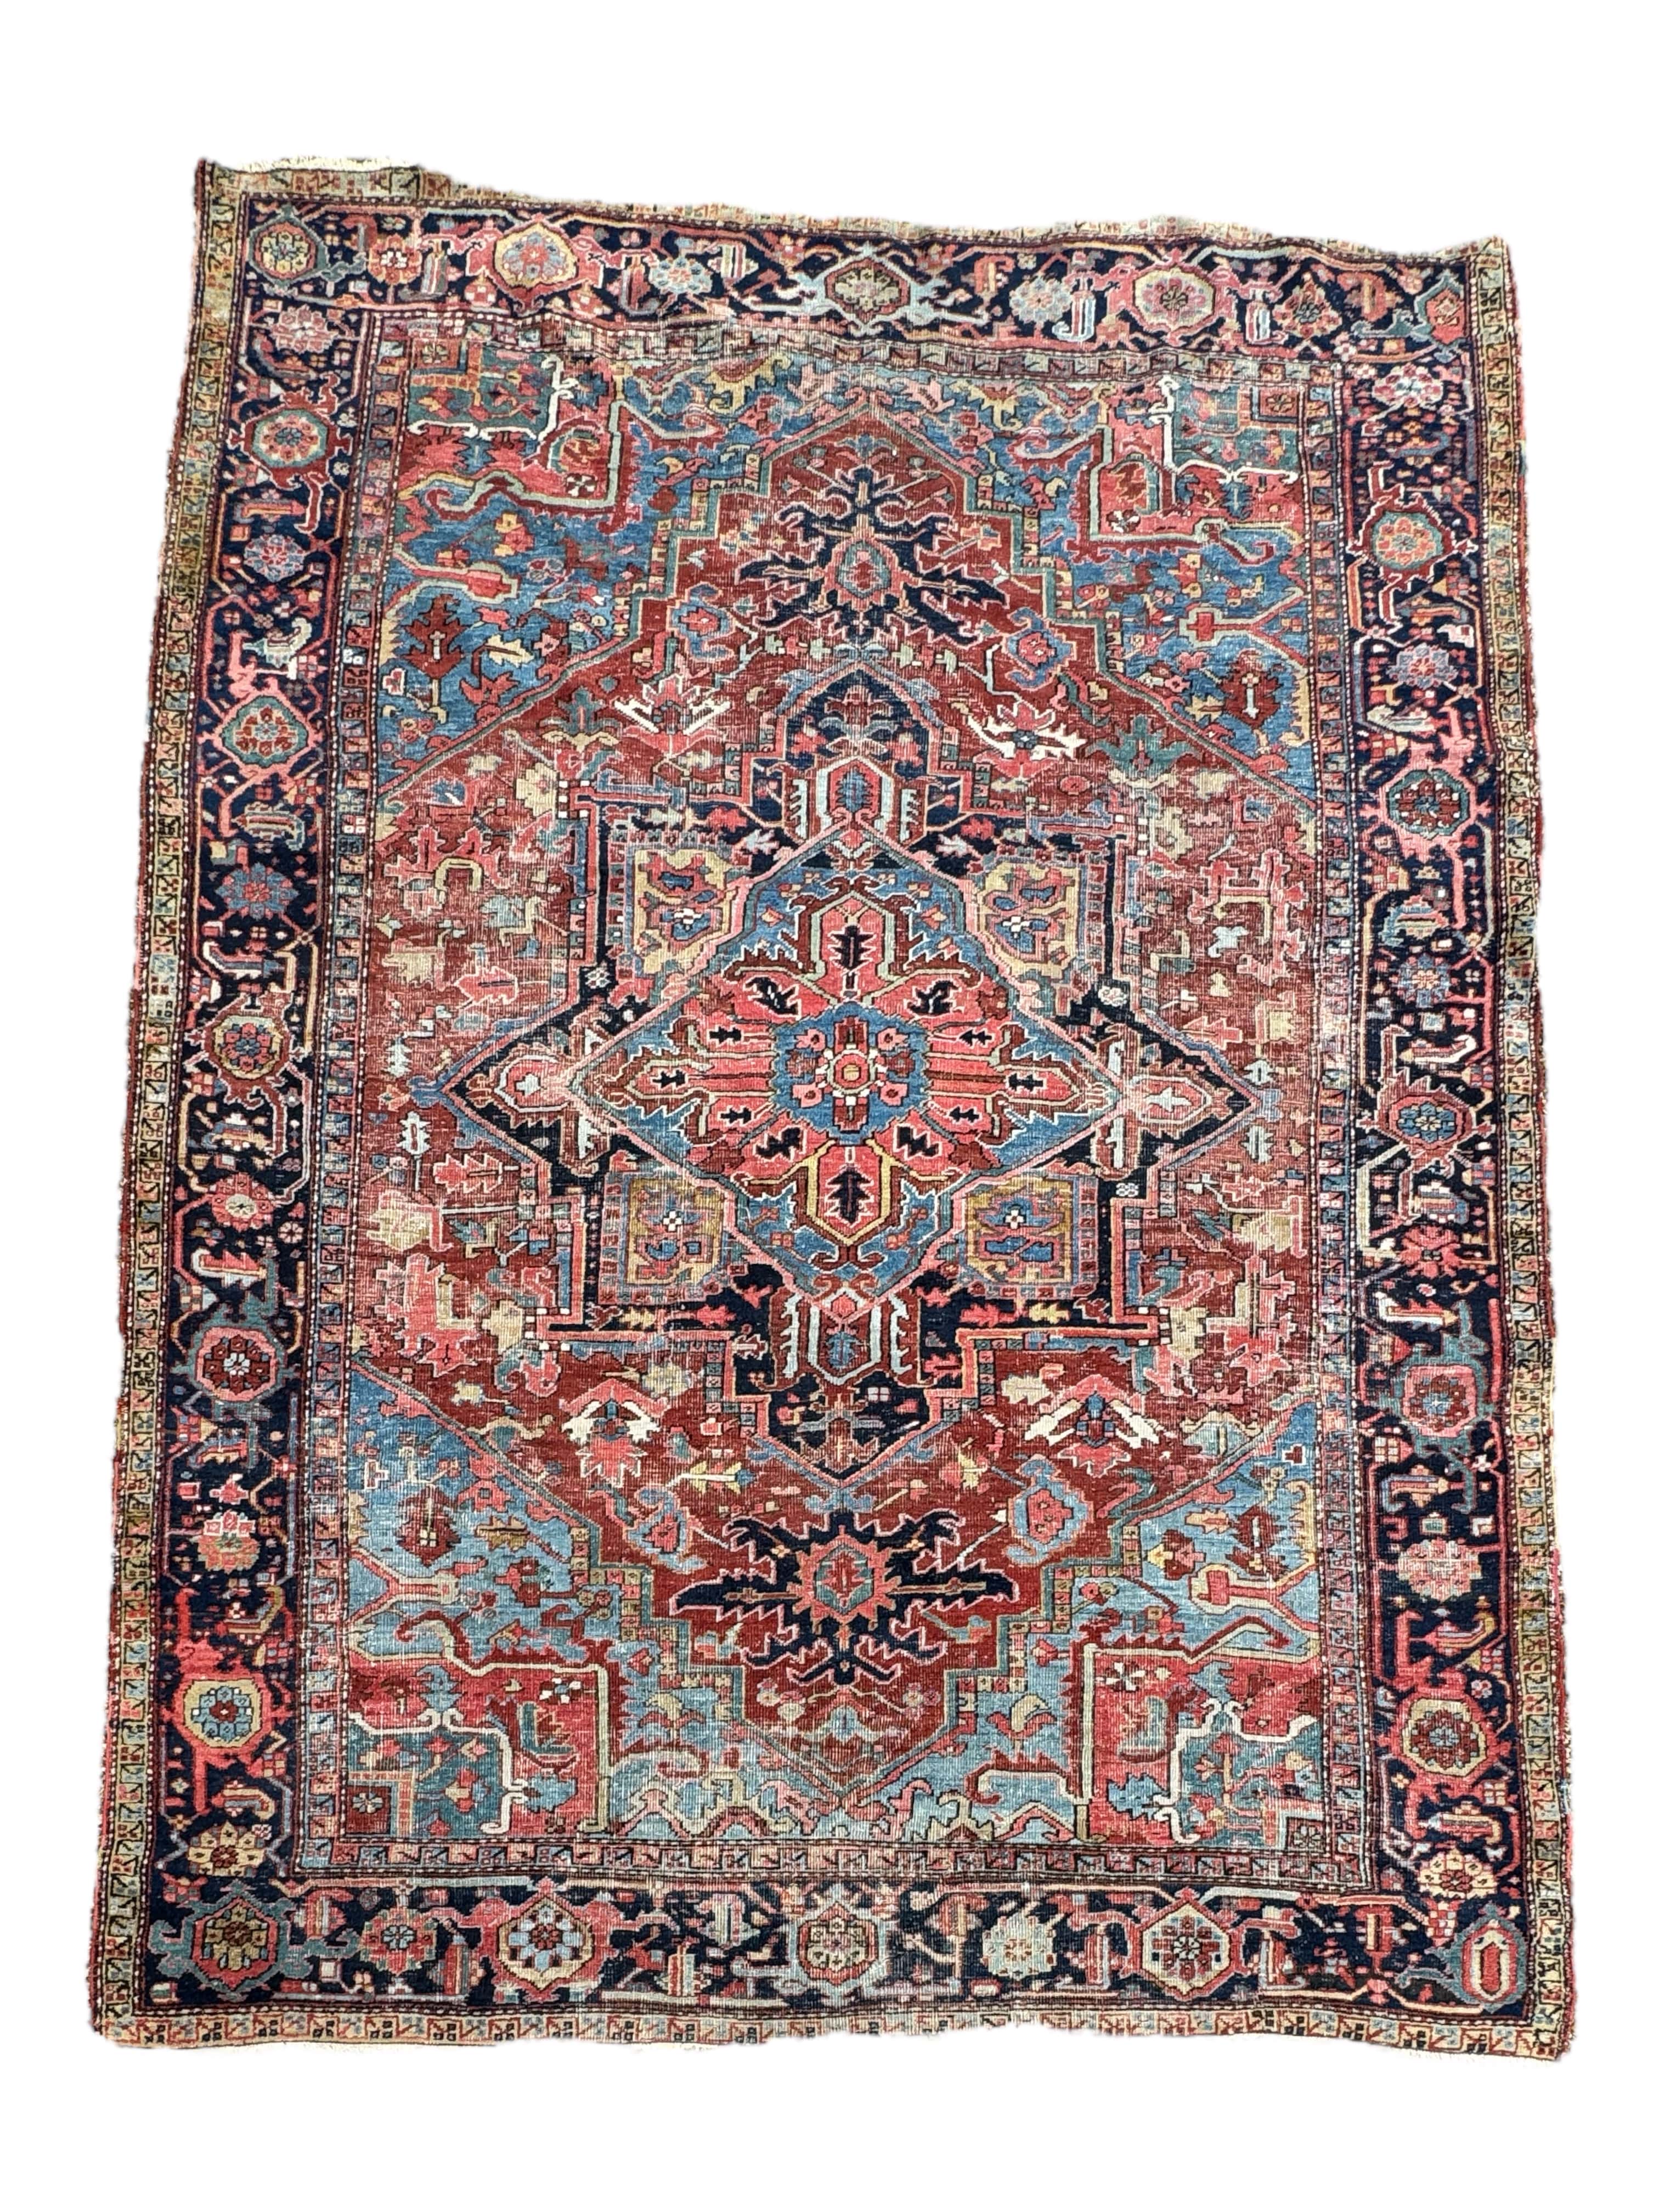 A Heriz carpet, North West Persia, circa 1900